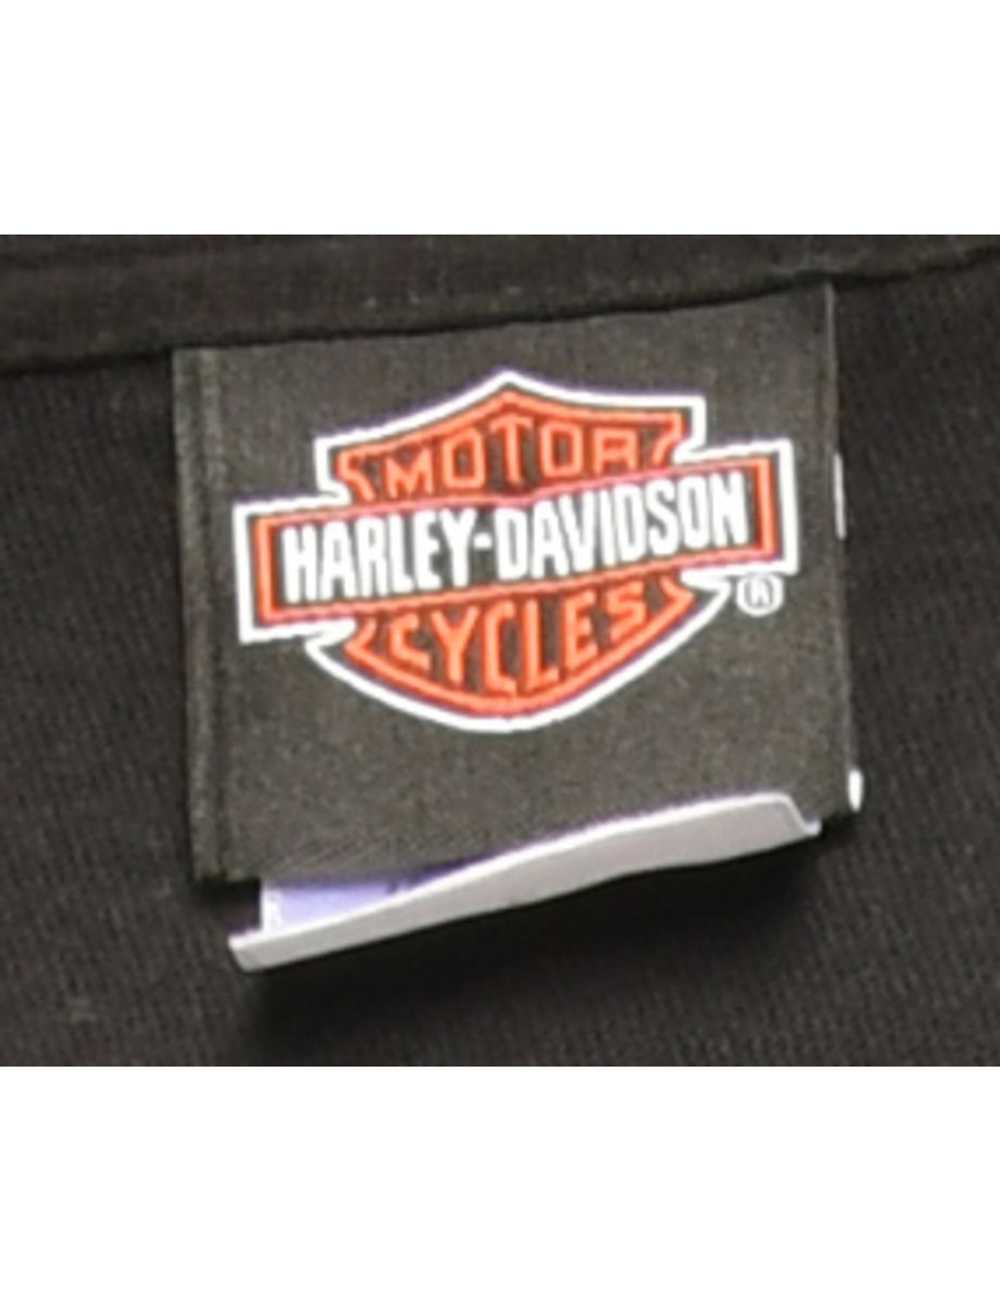 Harley Davidson Printed T-shirt - M - image 4